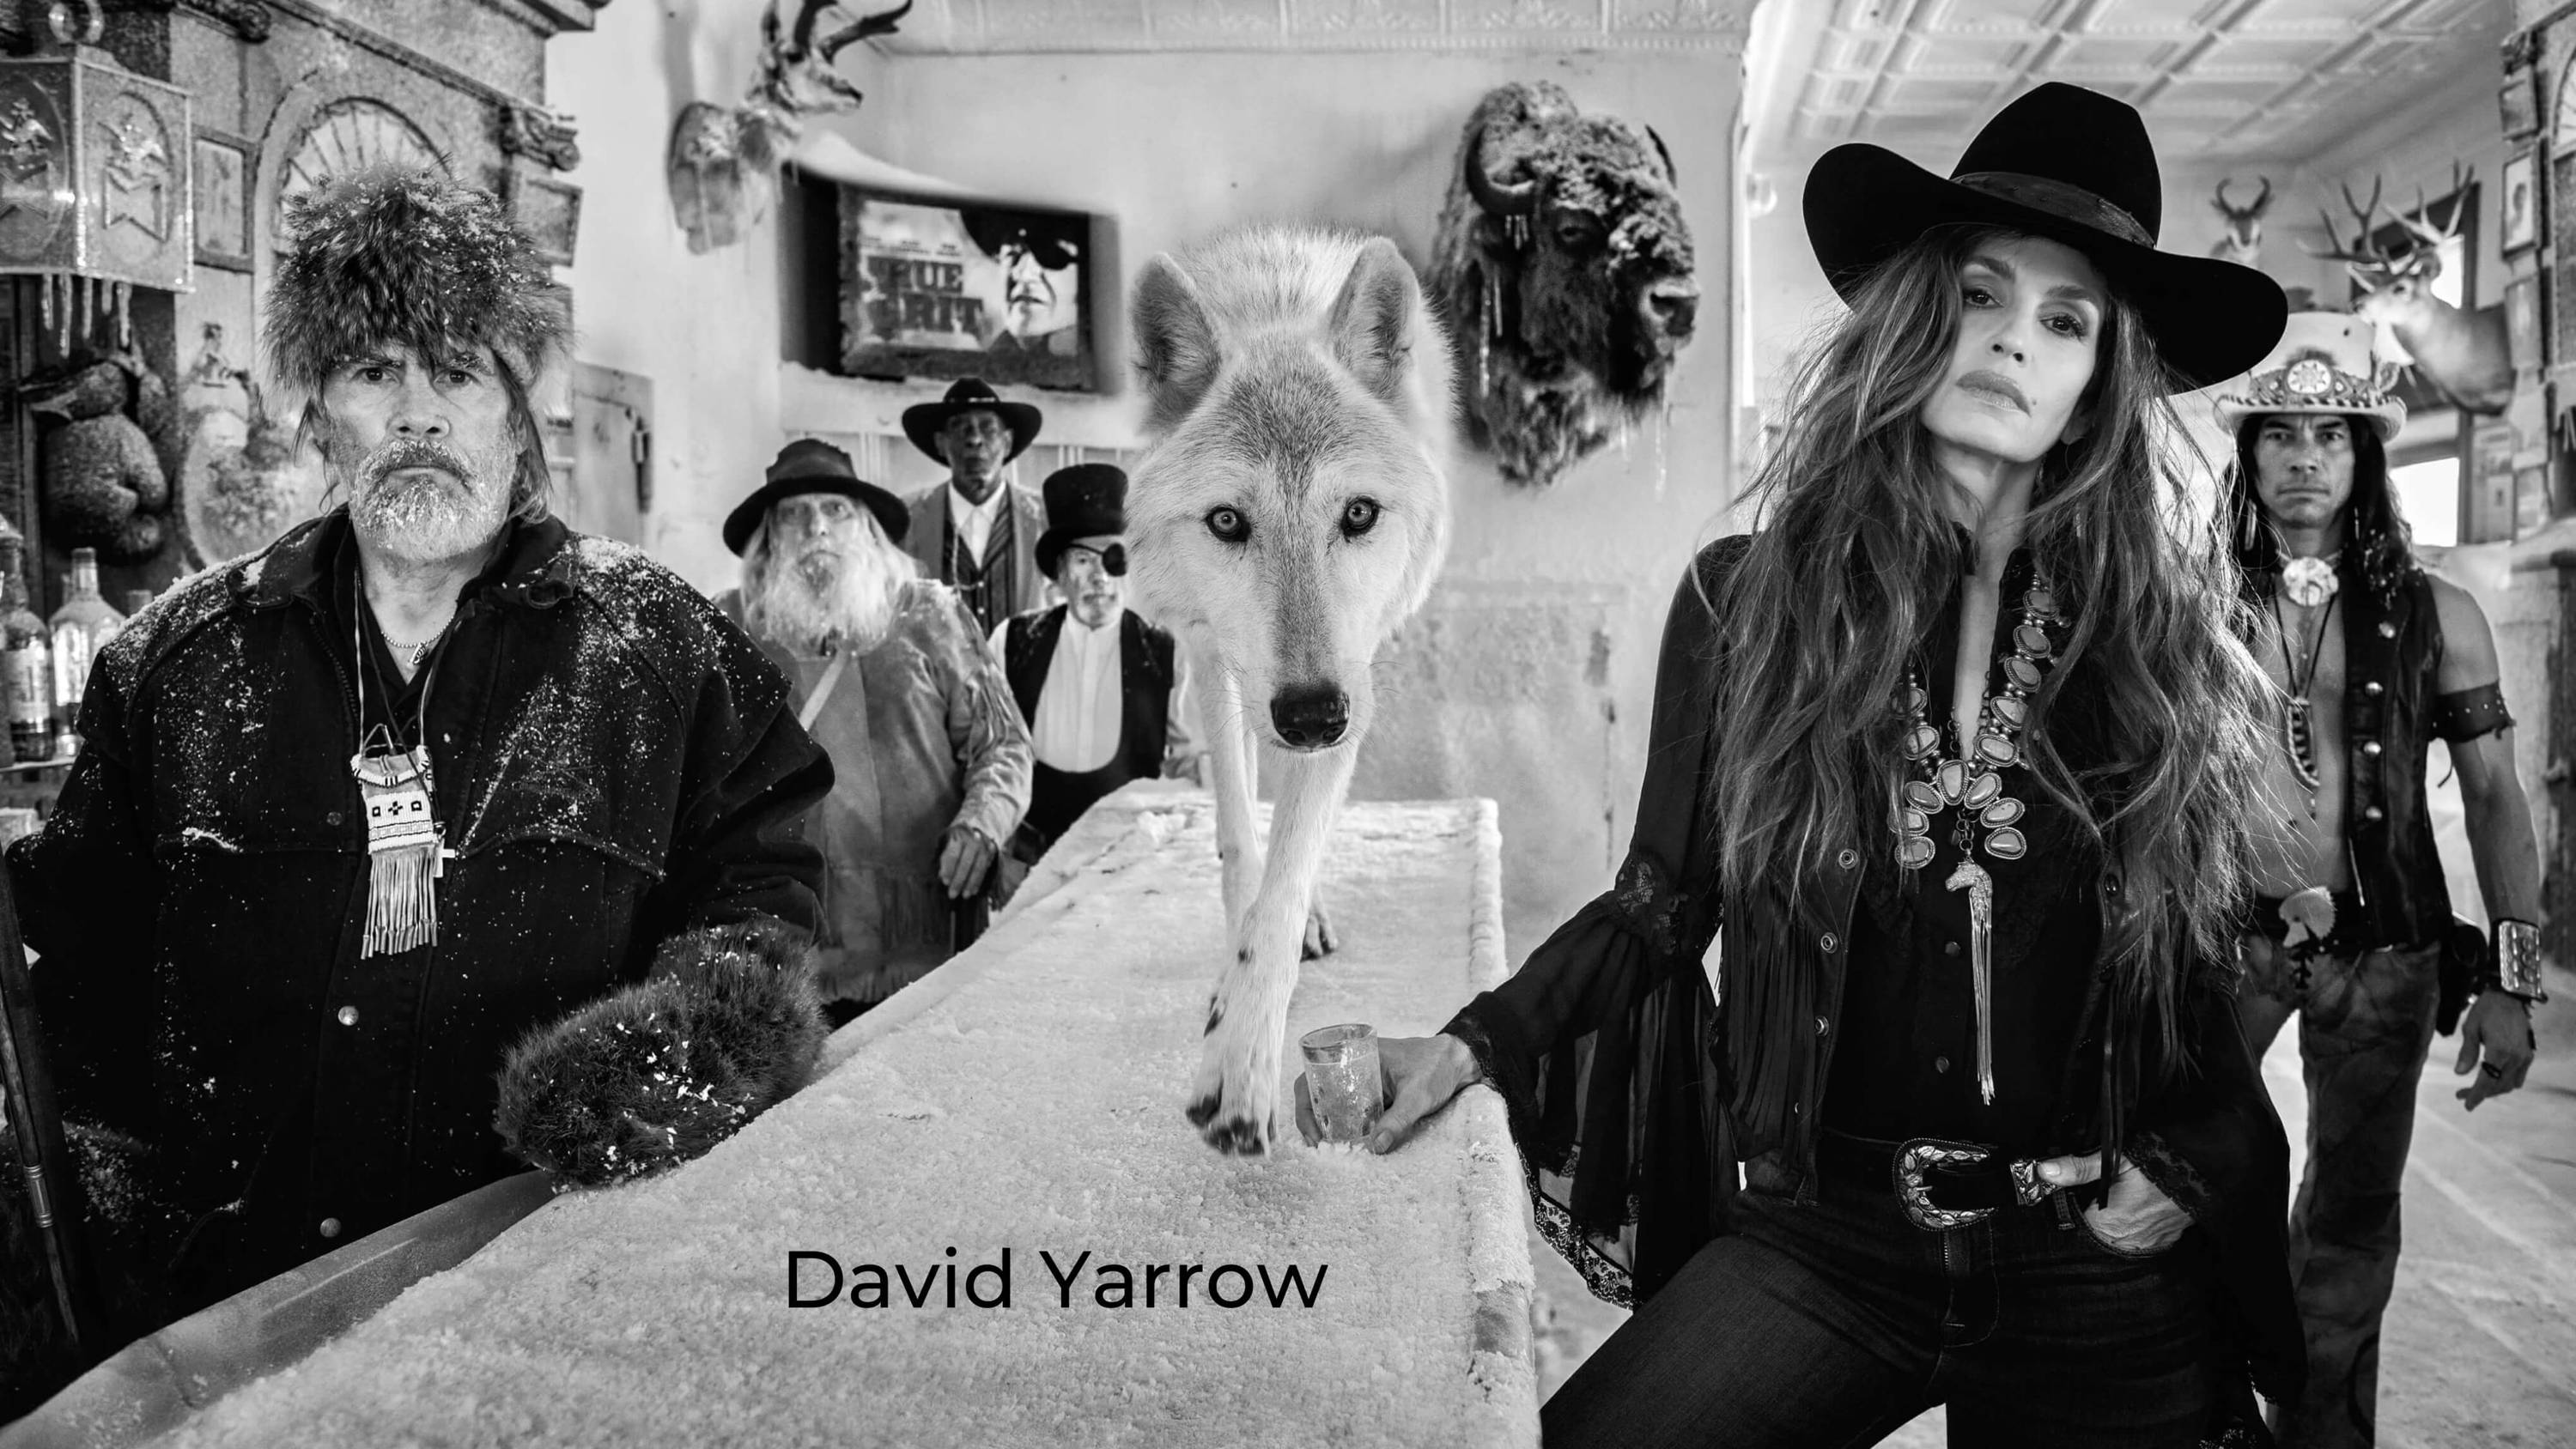 David Yarrow. Santa Fe Art Gallery. Ben Nighthorse. Cindy Crawford. David Yarrow Photography. David Yarrow photograph for sale.